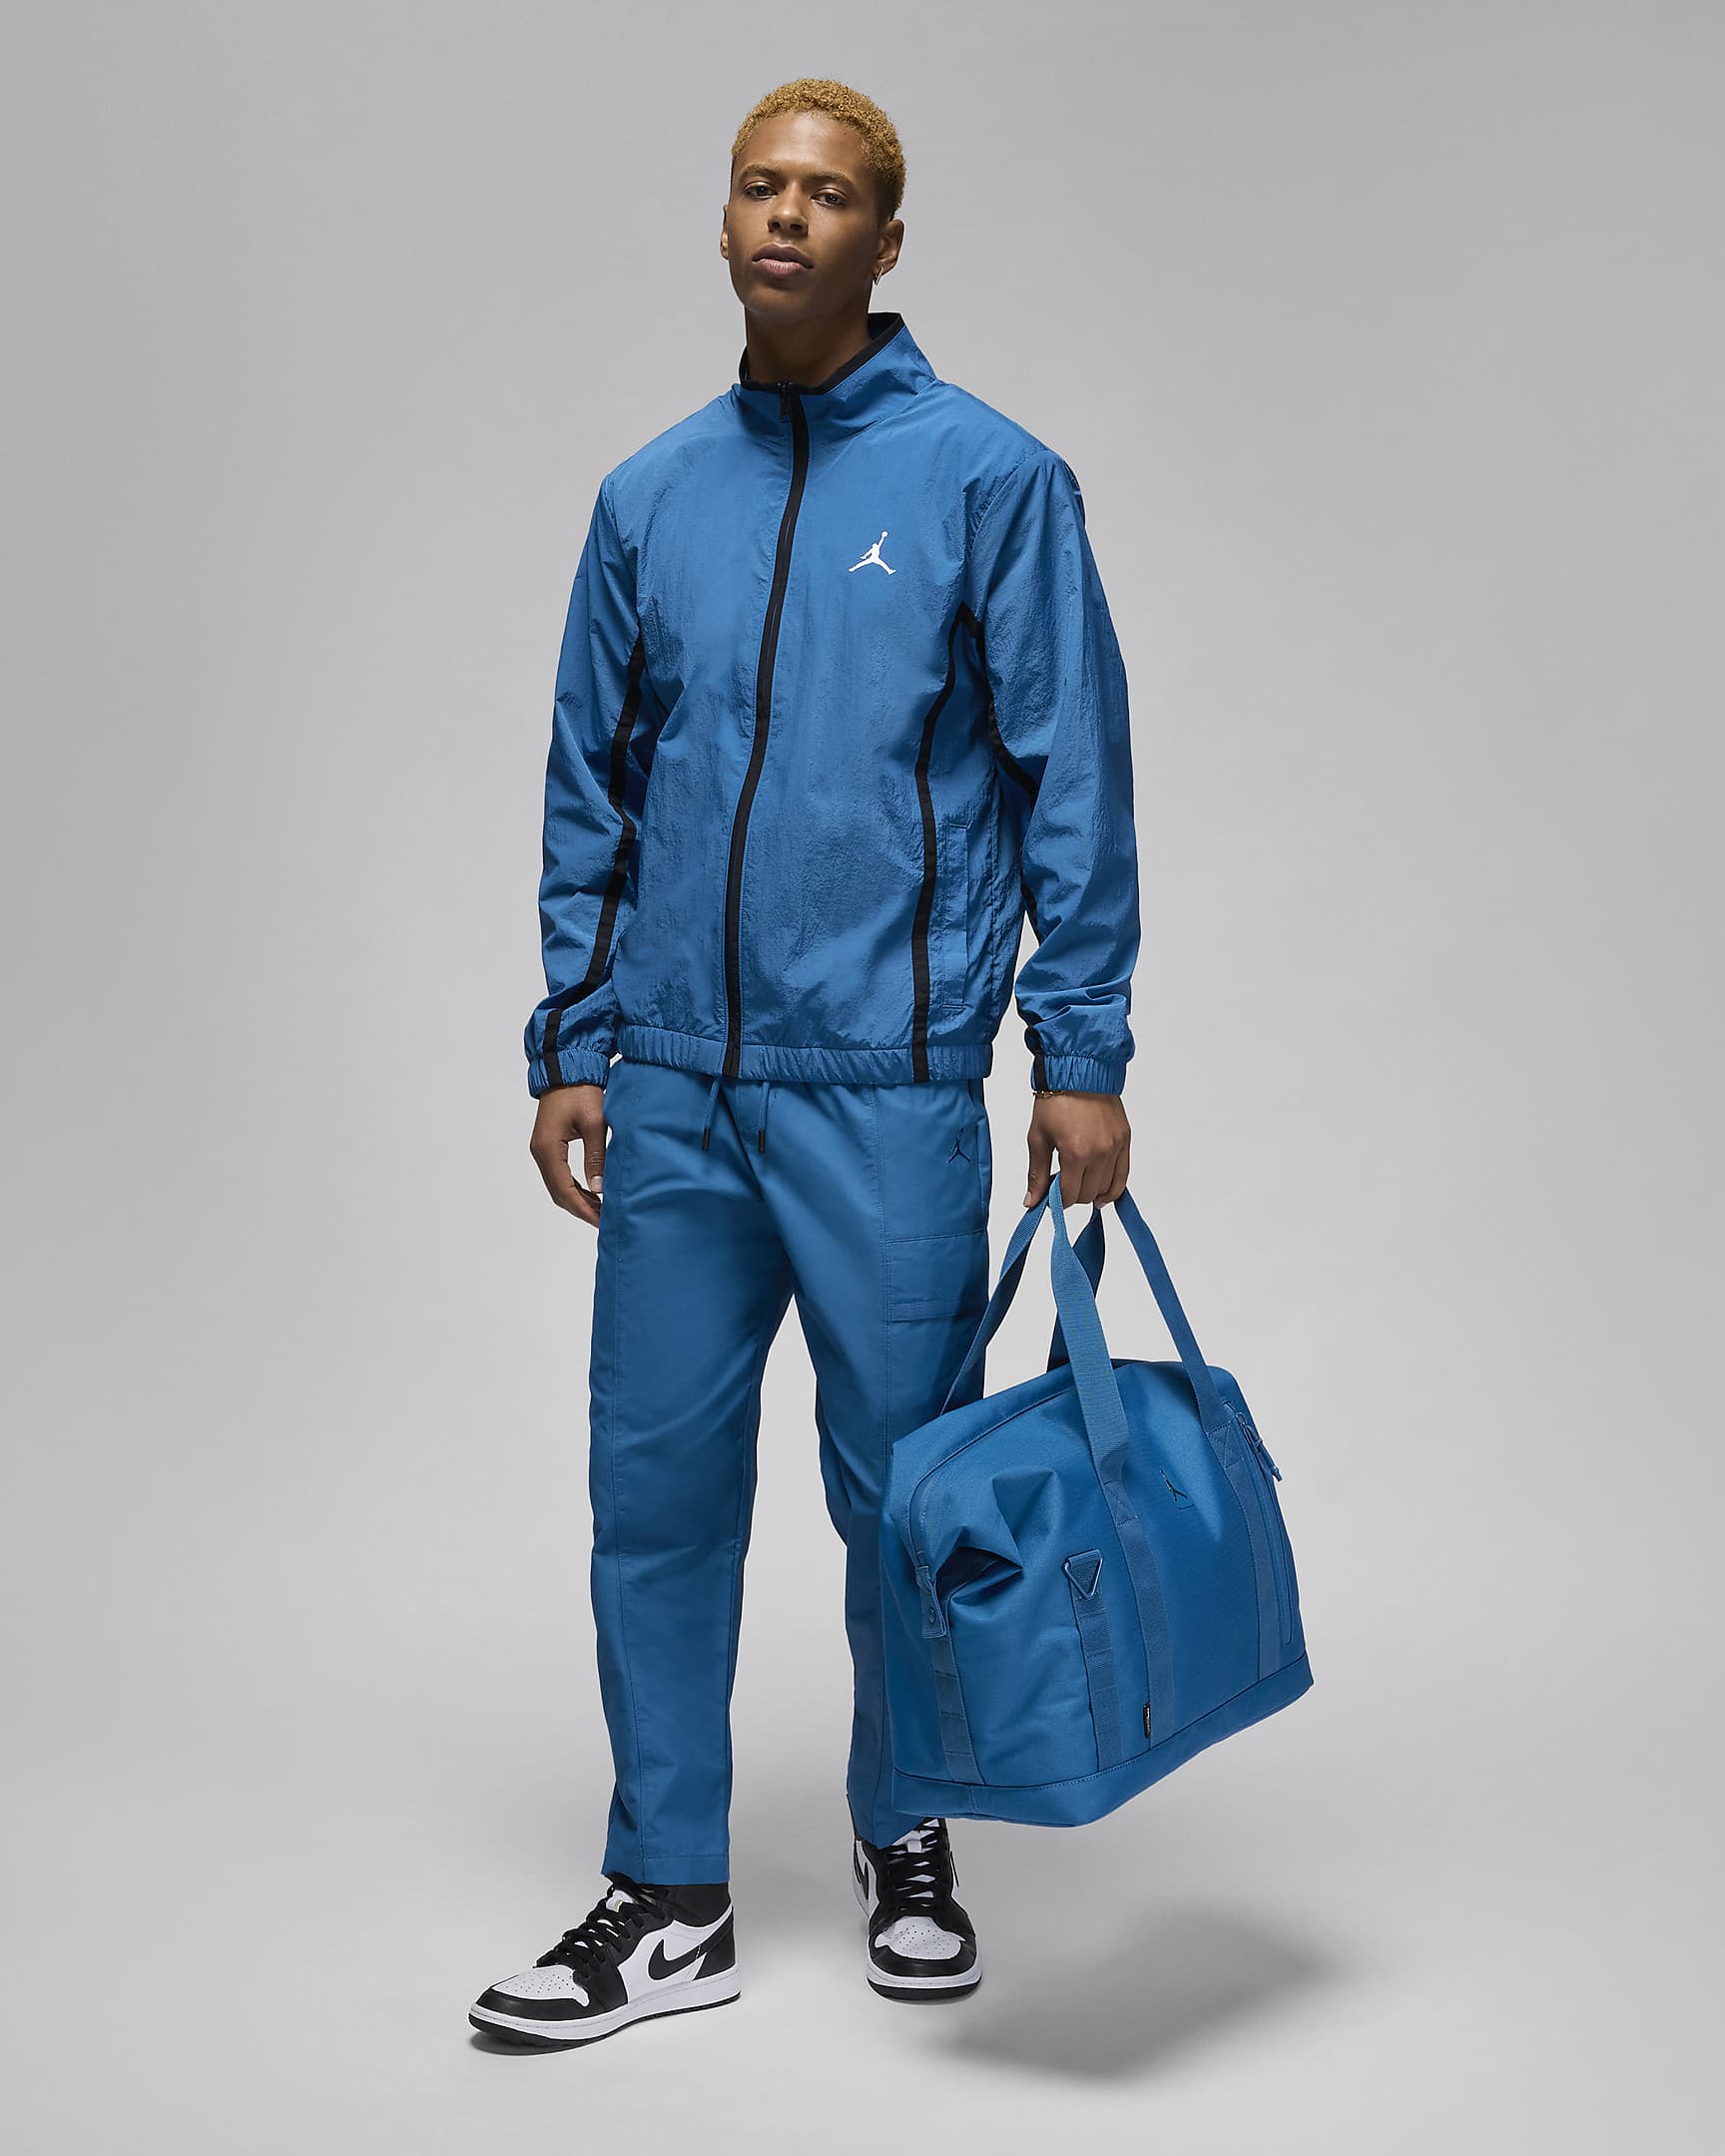 Jordan Essentials Men's Woven Jacket - Industrial Blue/Black/White